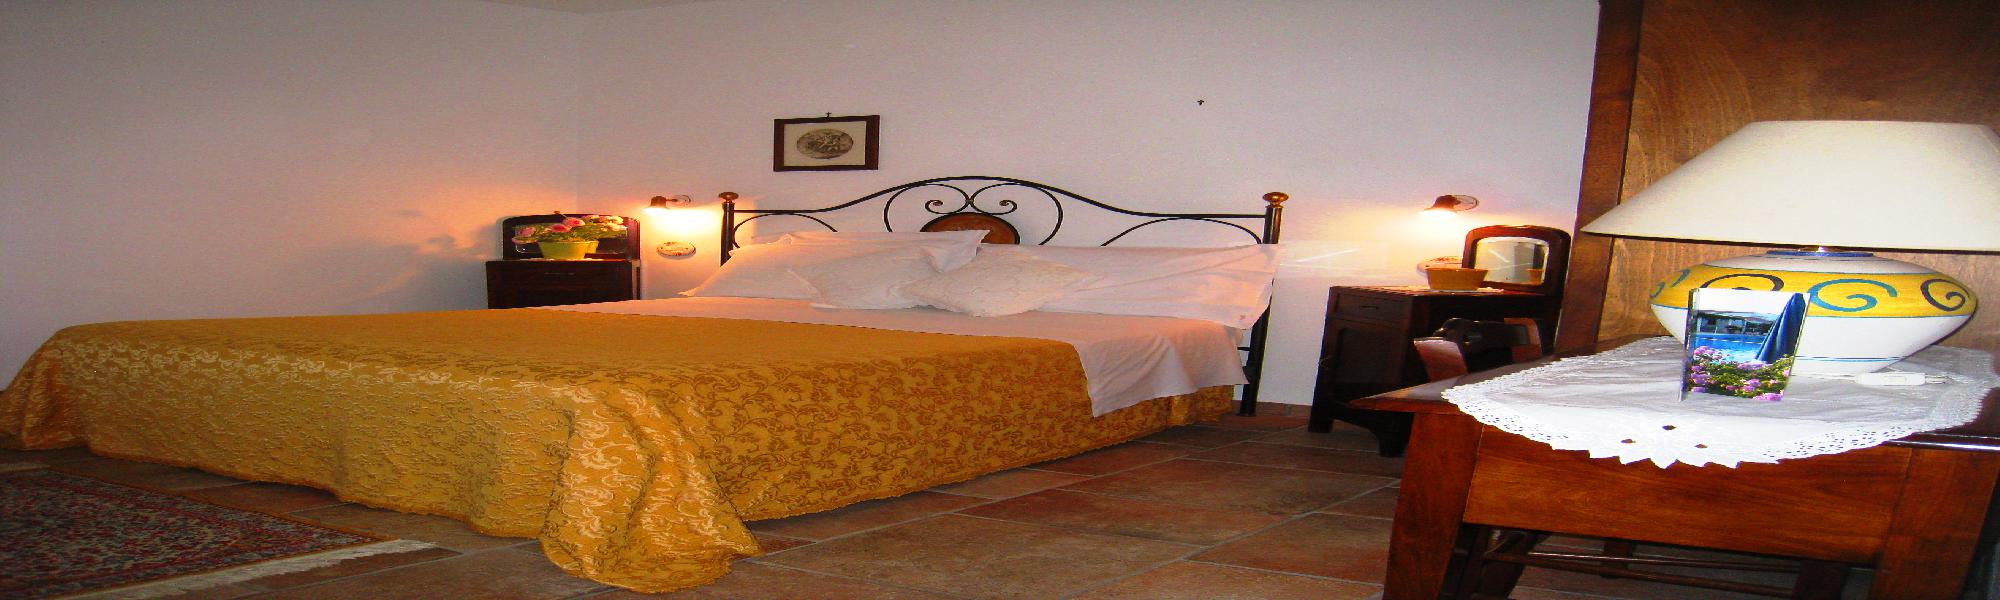 Rental Charming Rooms Ostuni - Agriturismo Apulia - Agriturismo Puglia 14